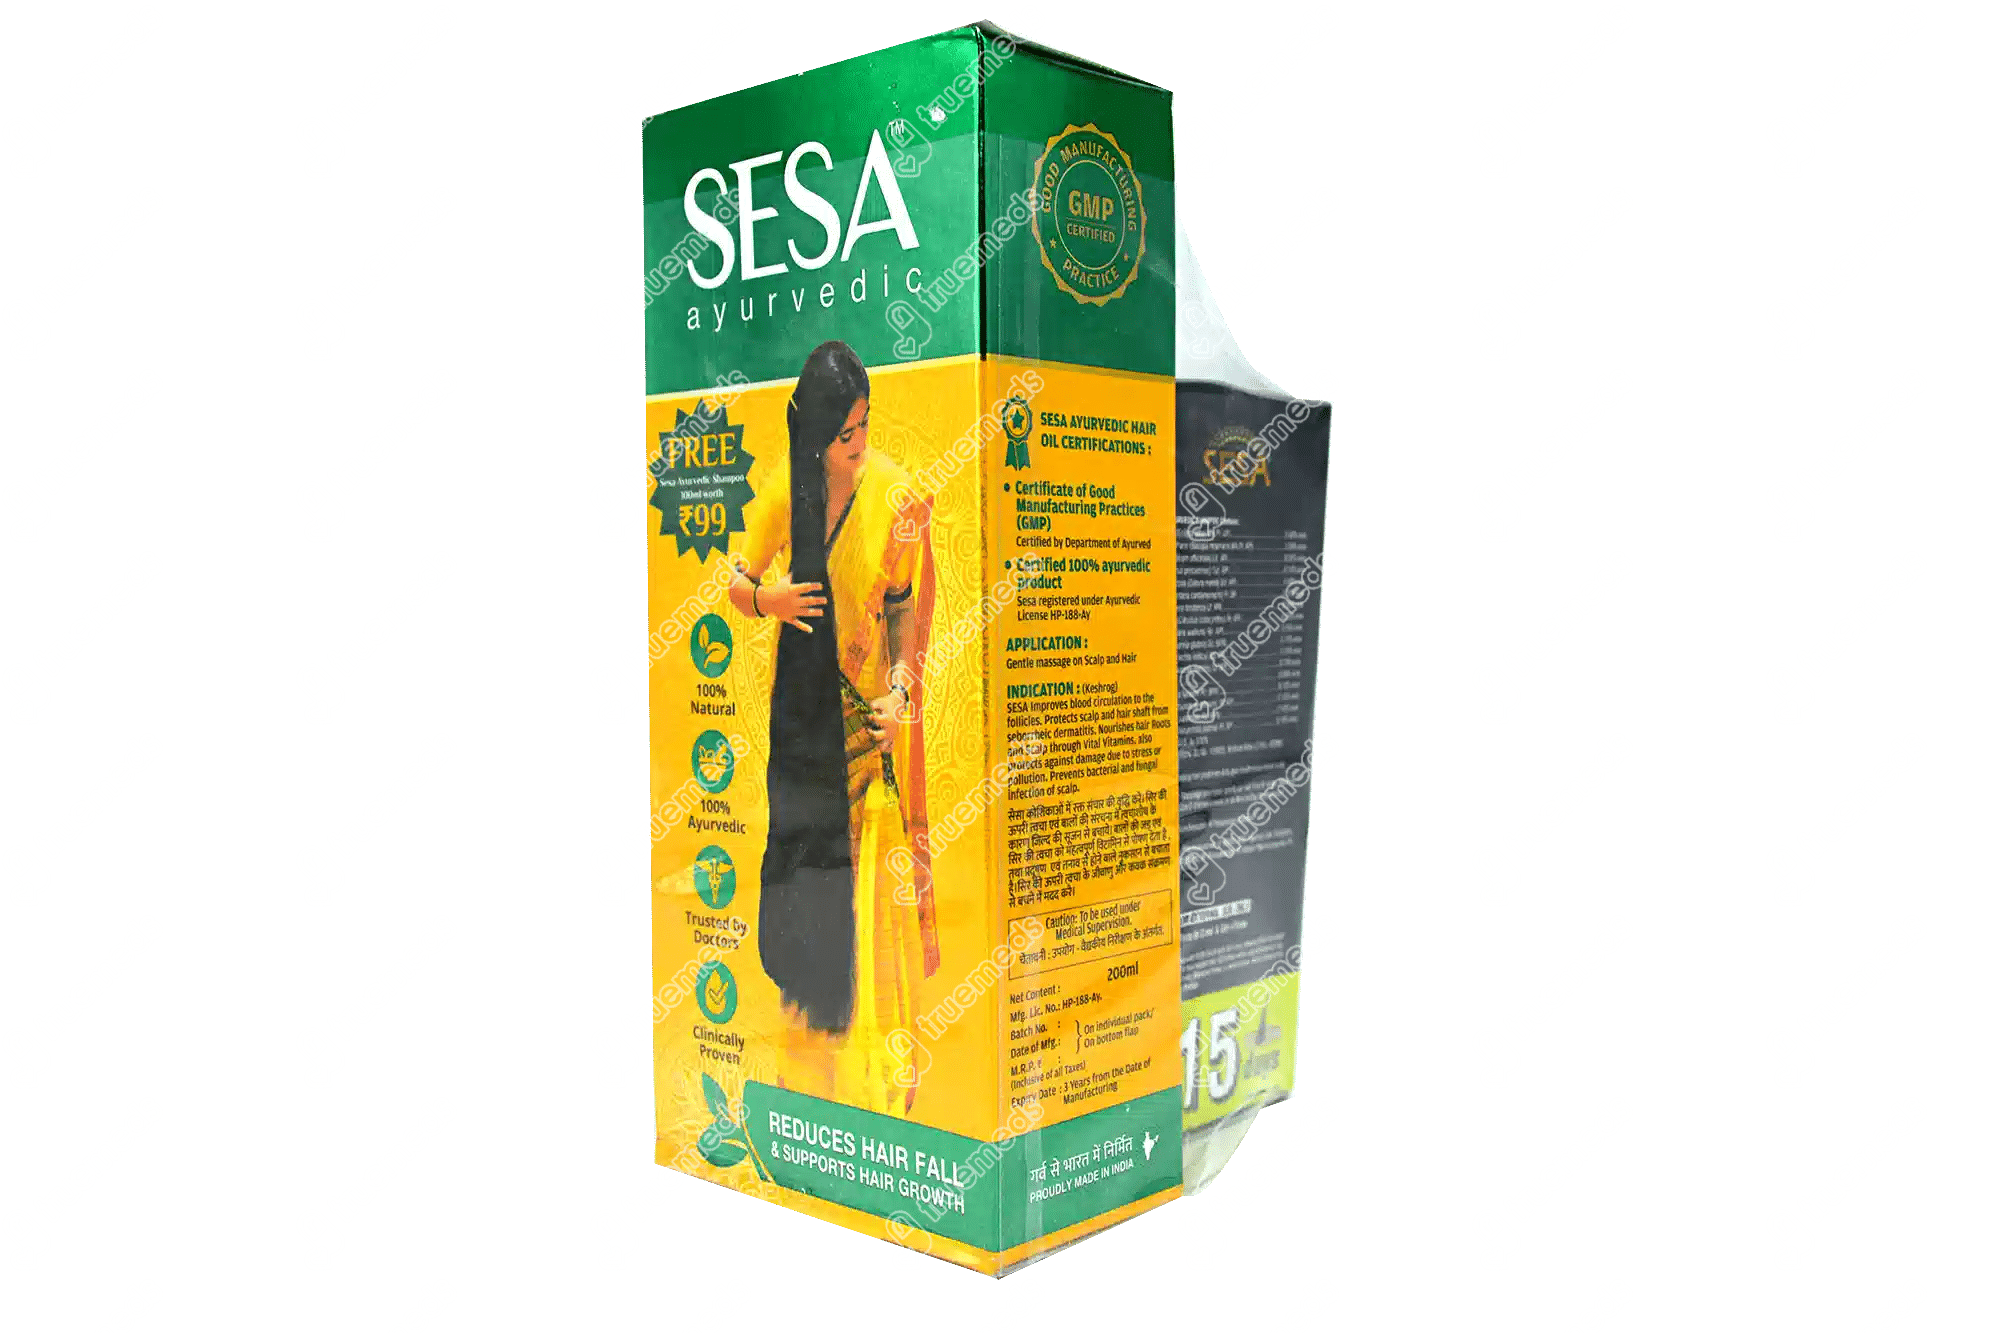 Sesa Ayurvedic Hair Oil, 200 ml Price, Uses, Side Effects, Composition -  Apollo Pharmacy